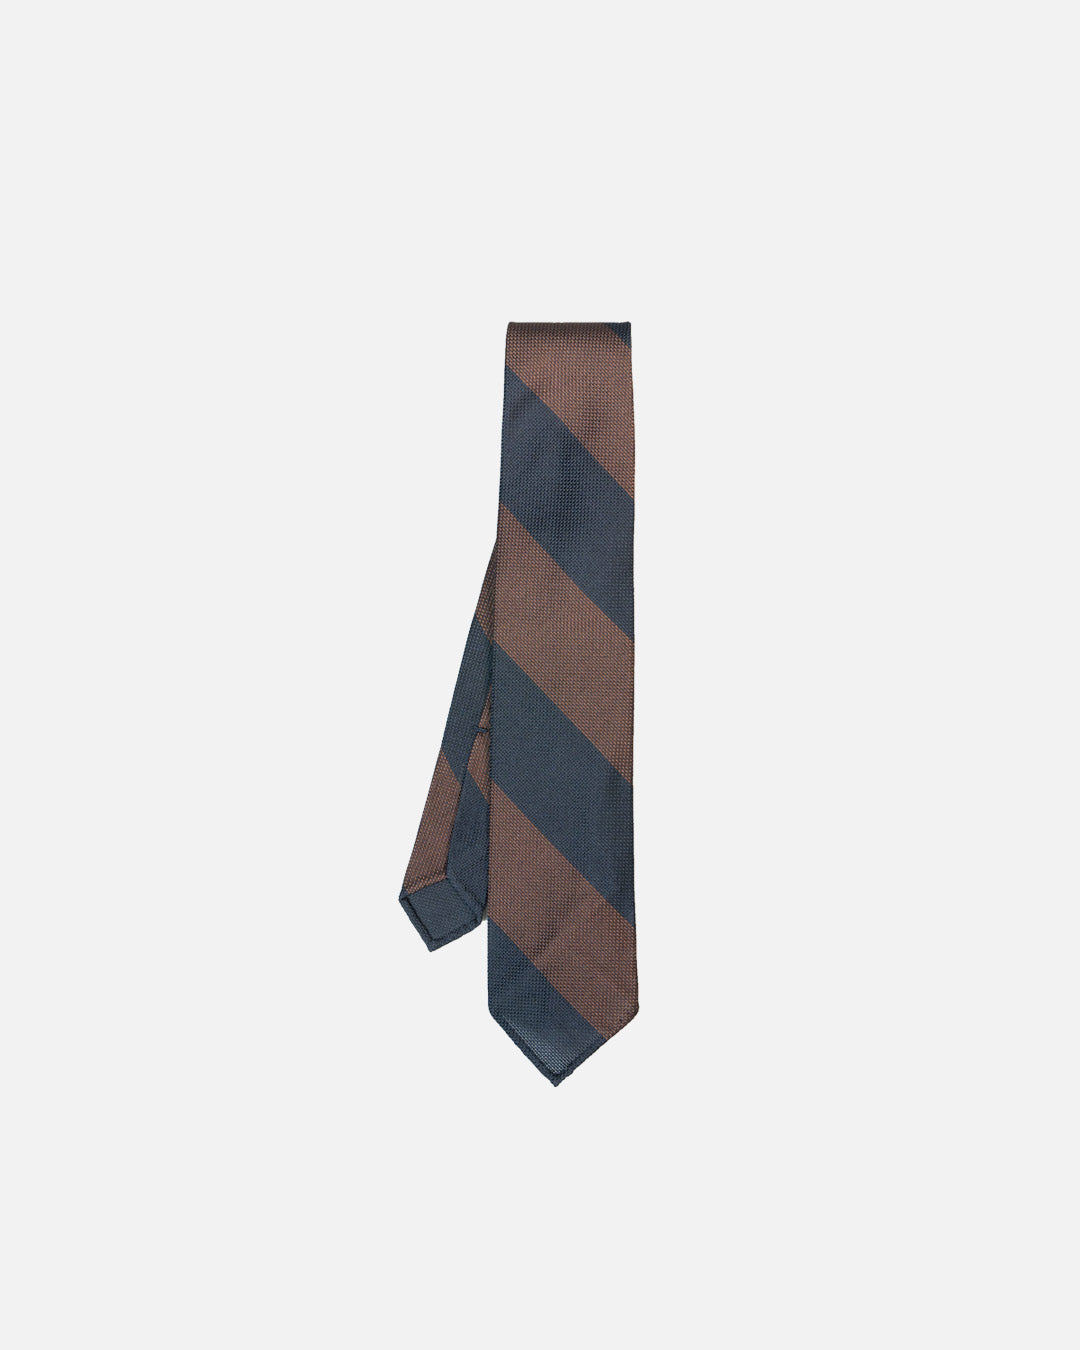 Shibumi Tie (Stripe)